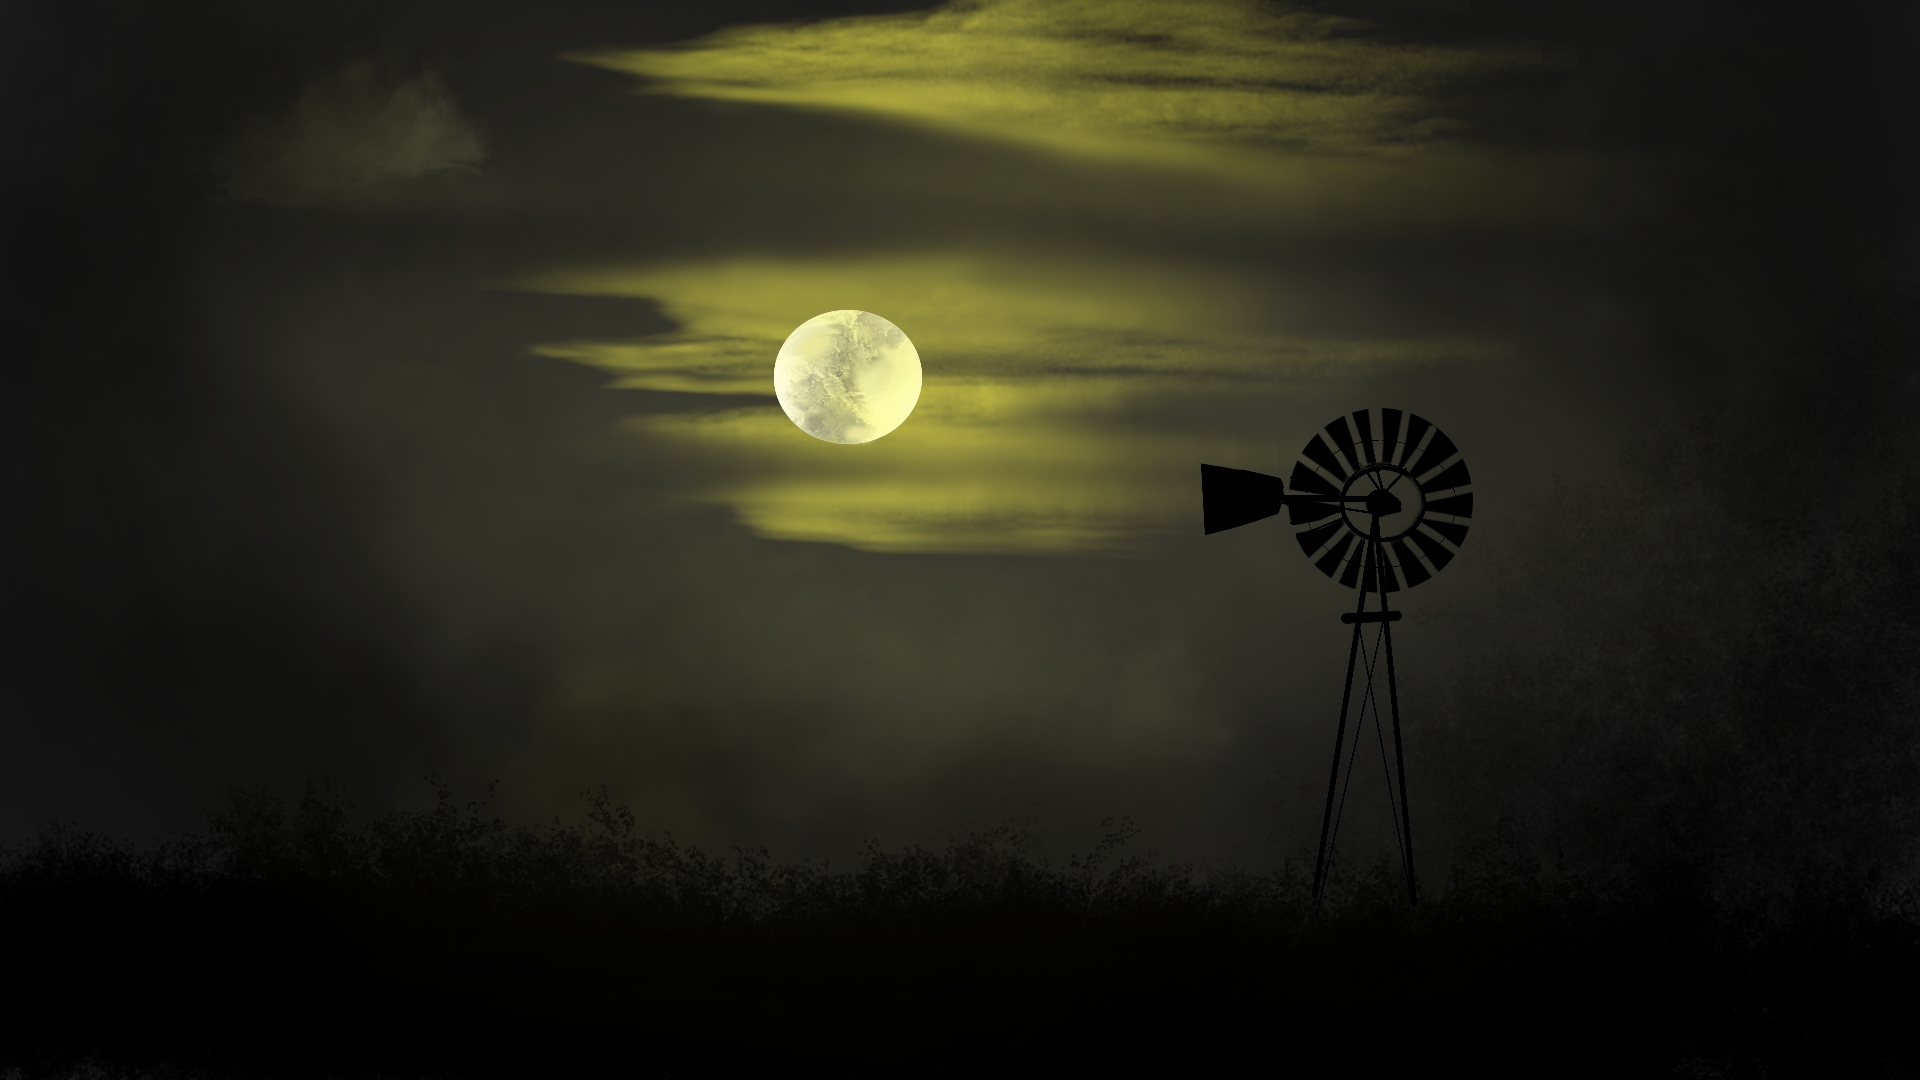 General 1920x1080 digital painting digital art landscape windmill moonlight full moon Moon night sky clouds silhouette